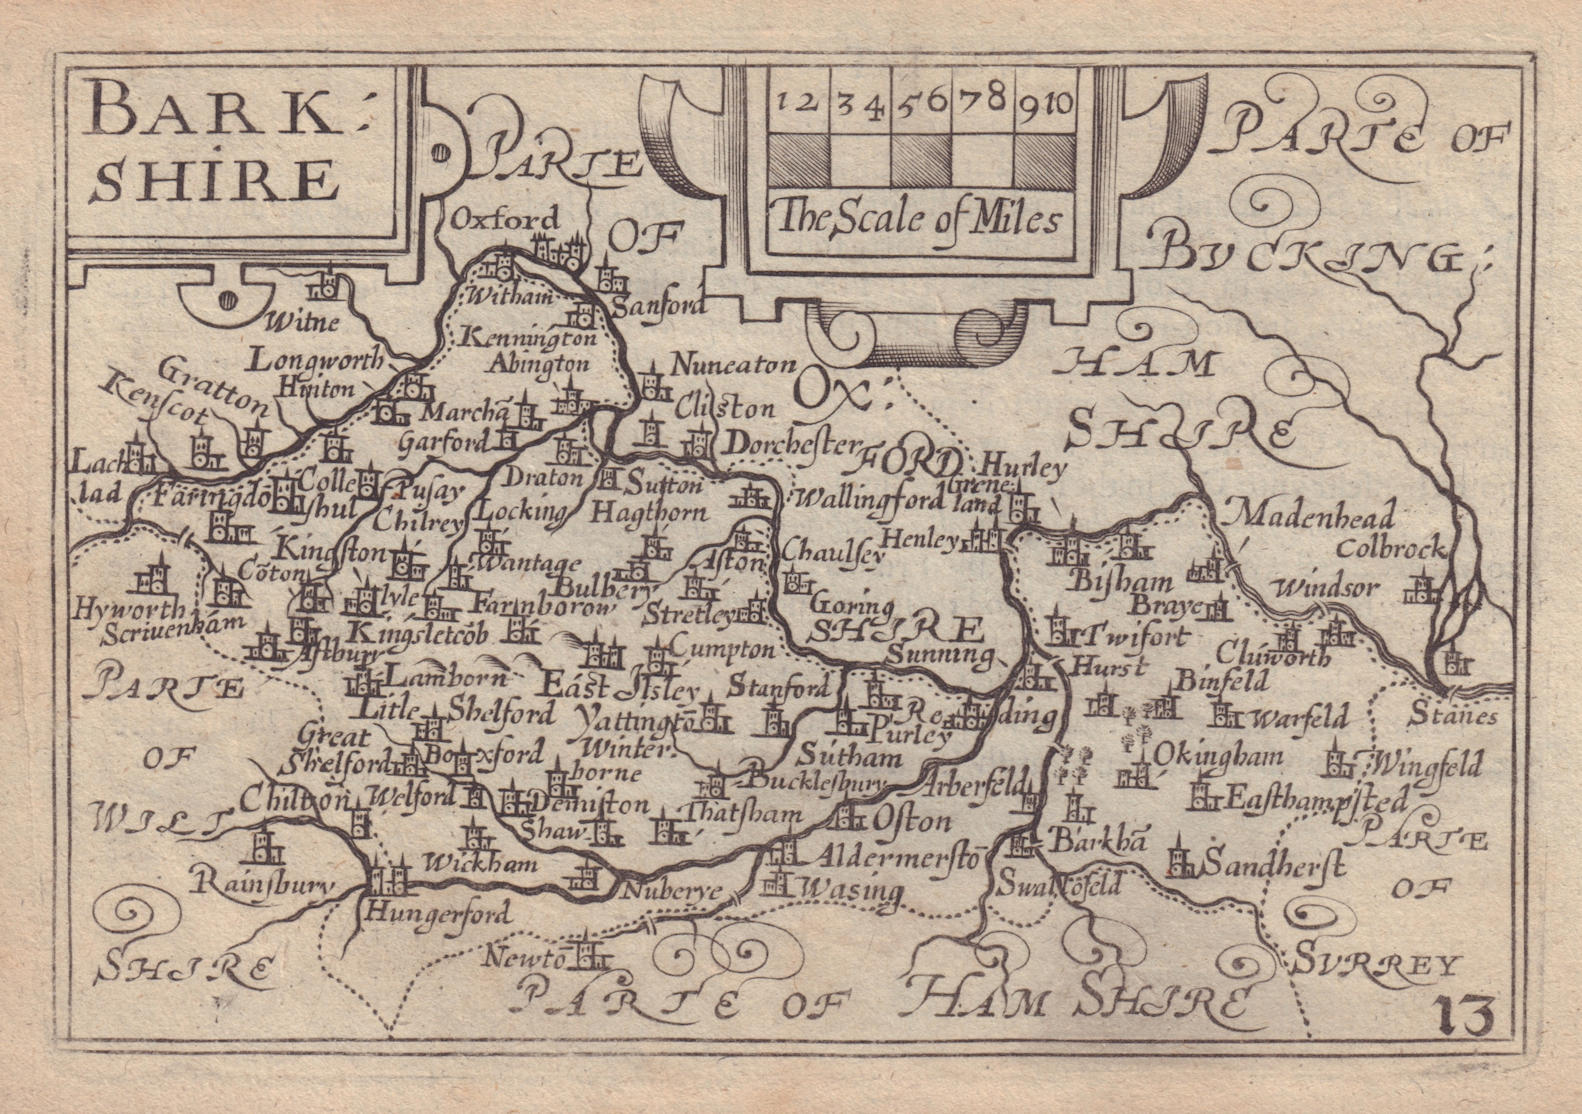 Associate Product Barkshire by van den Keere. "Speed miniature" Berkshire county map 1632